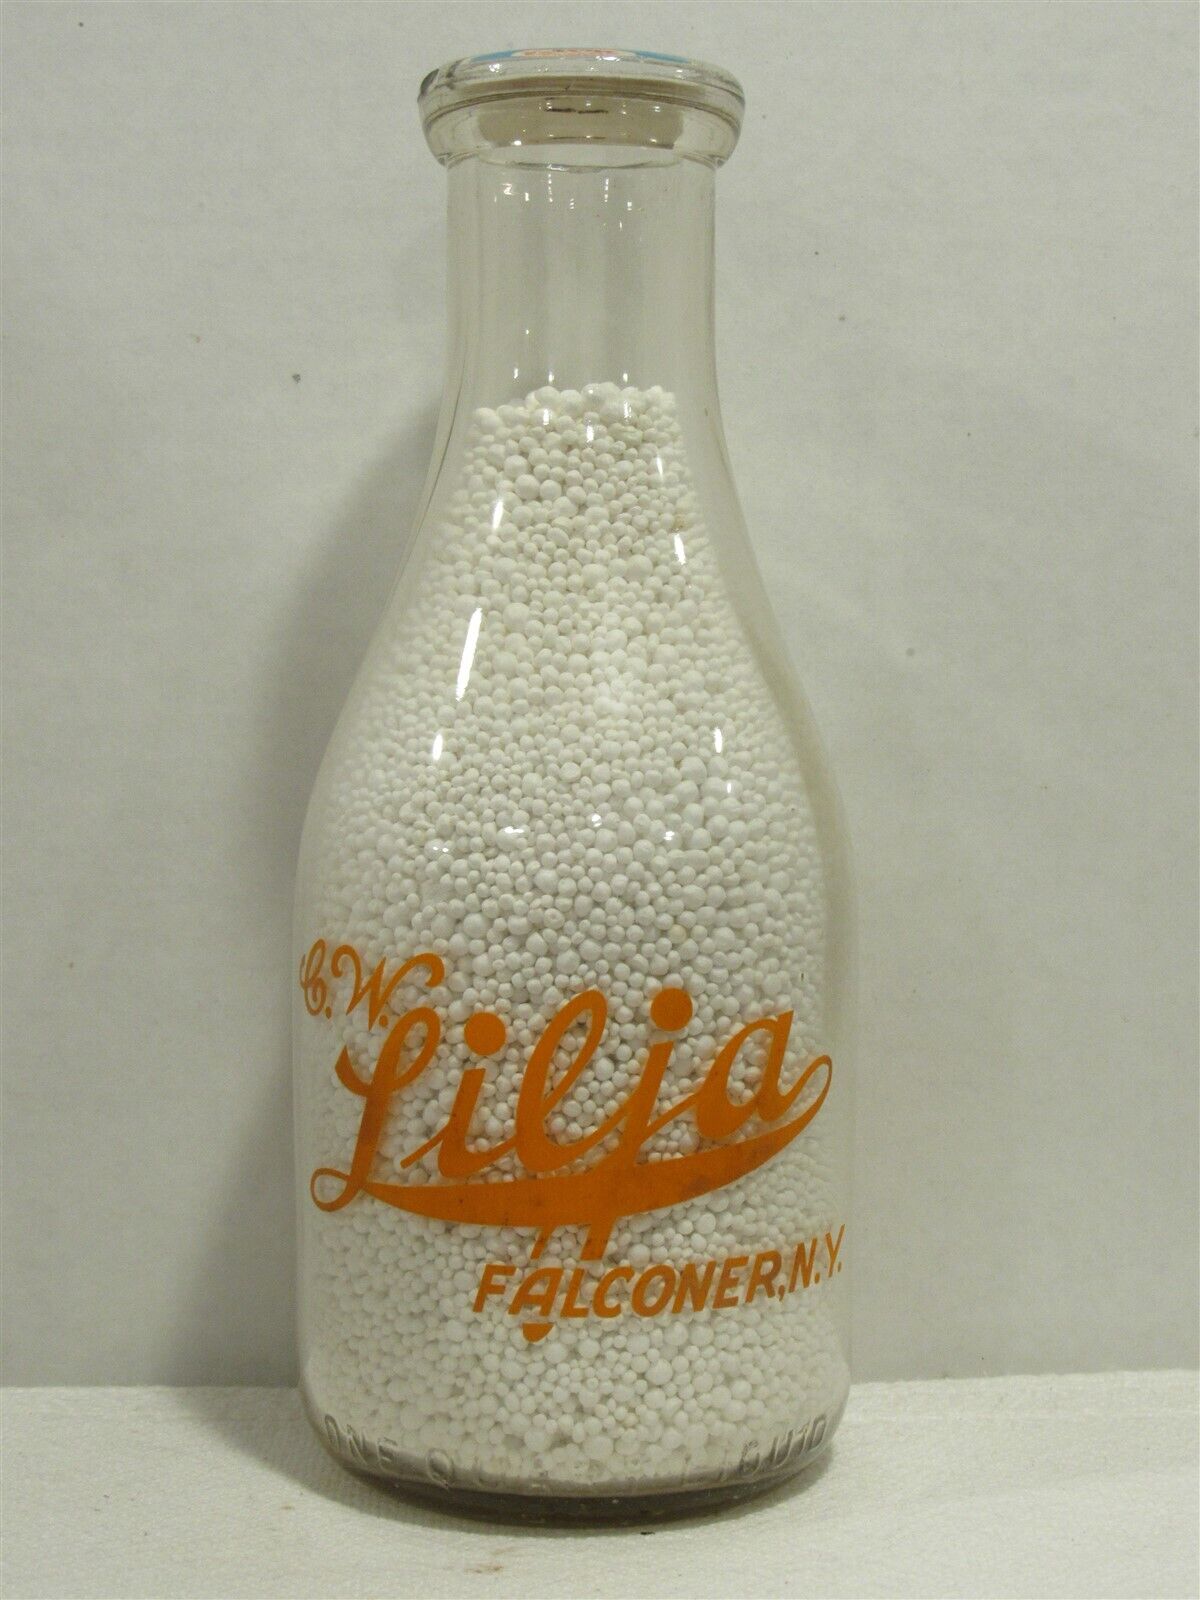 TRPQ Milk Bottle C W Lilja Dairy Farm Falconer NY CHAUTAUQUA CO 1943 Since 1912